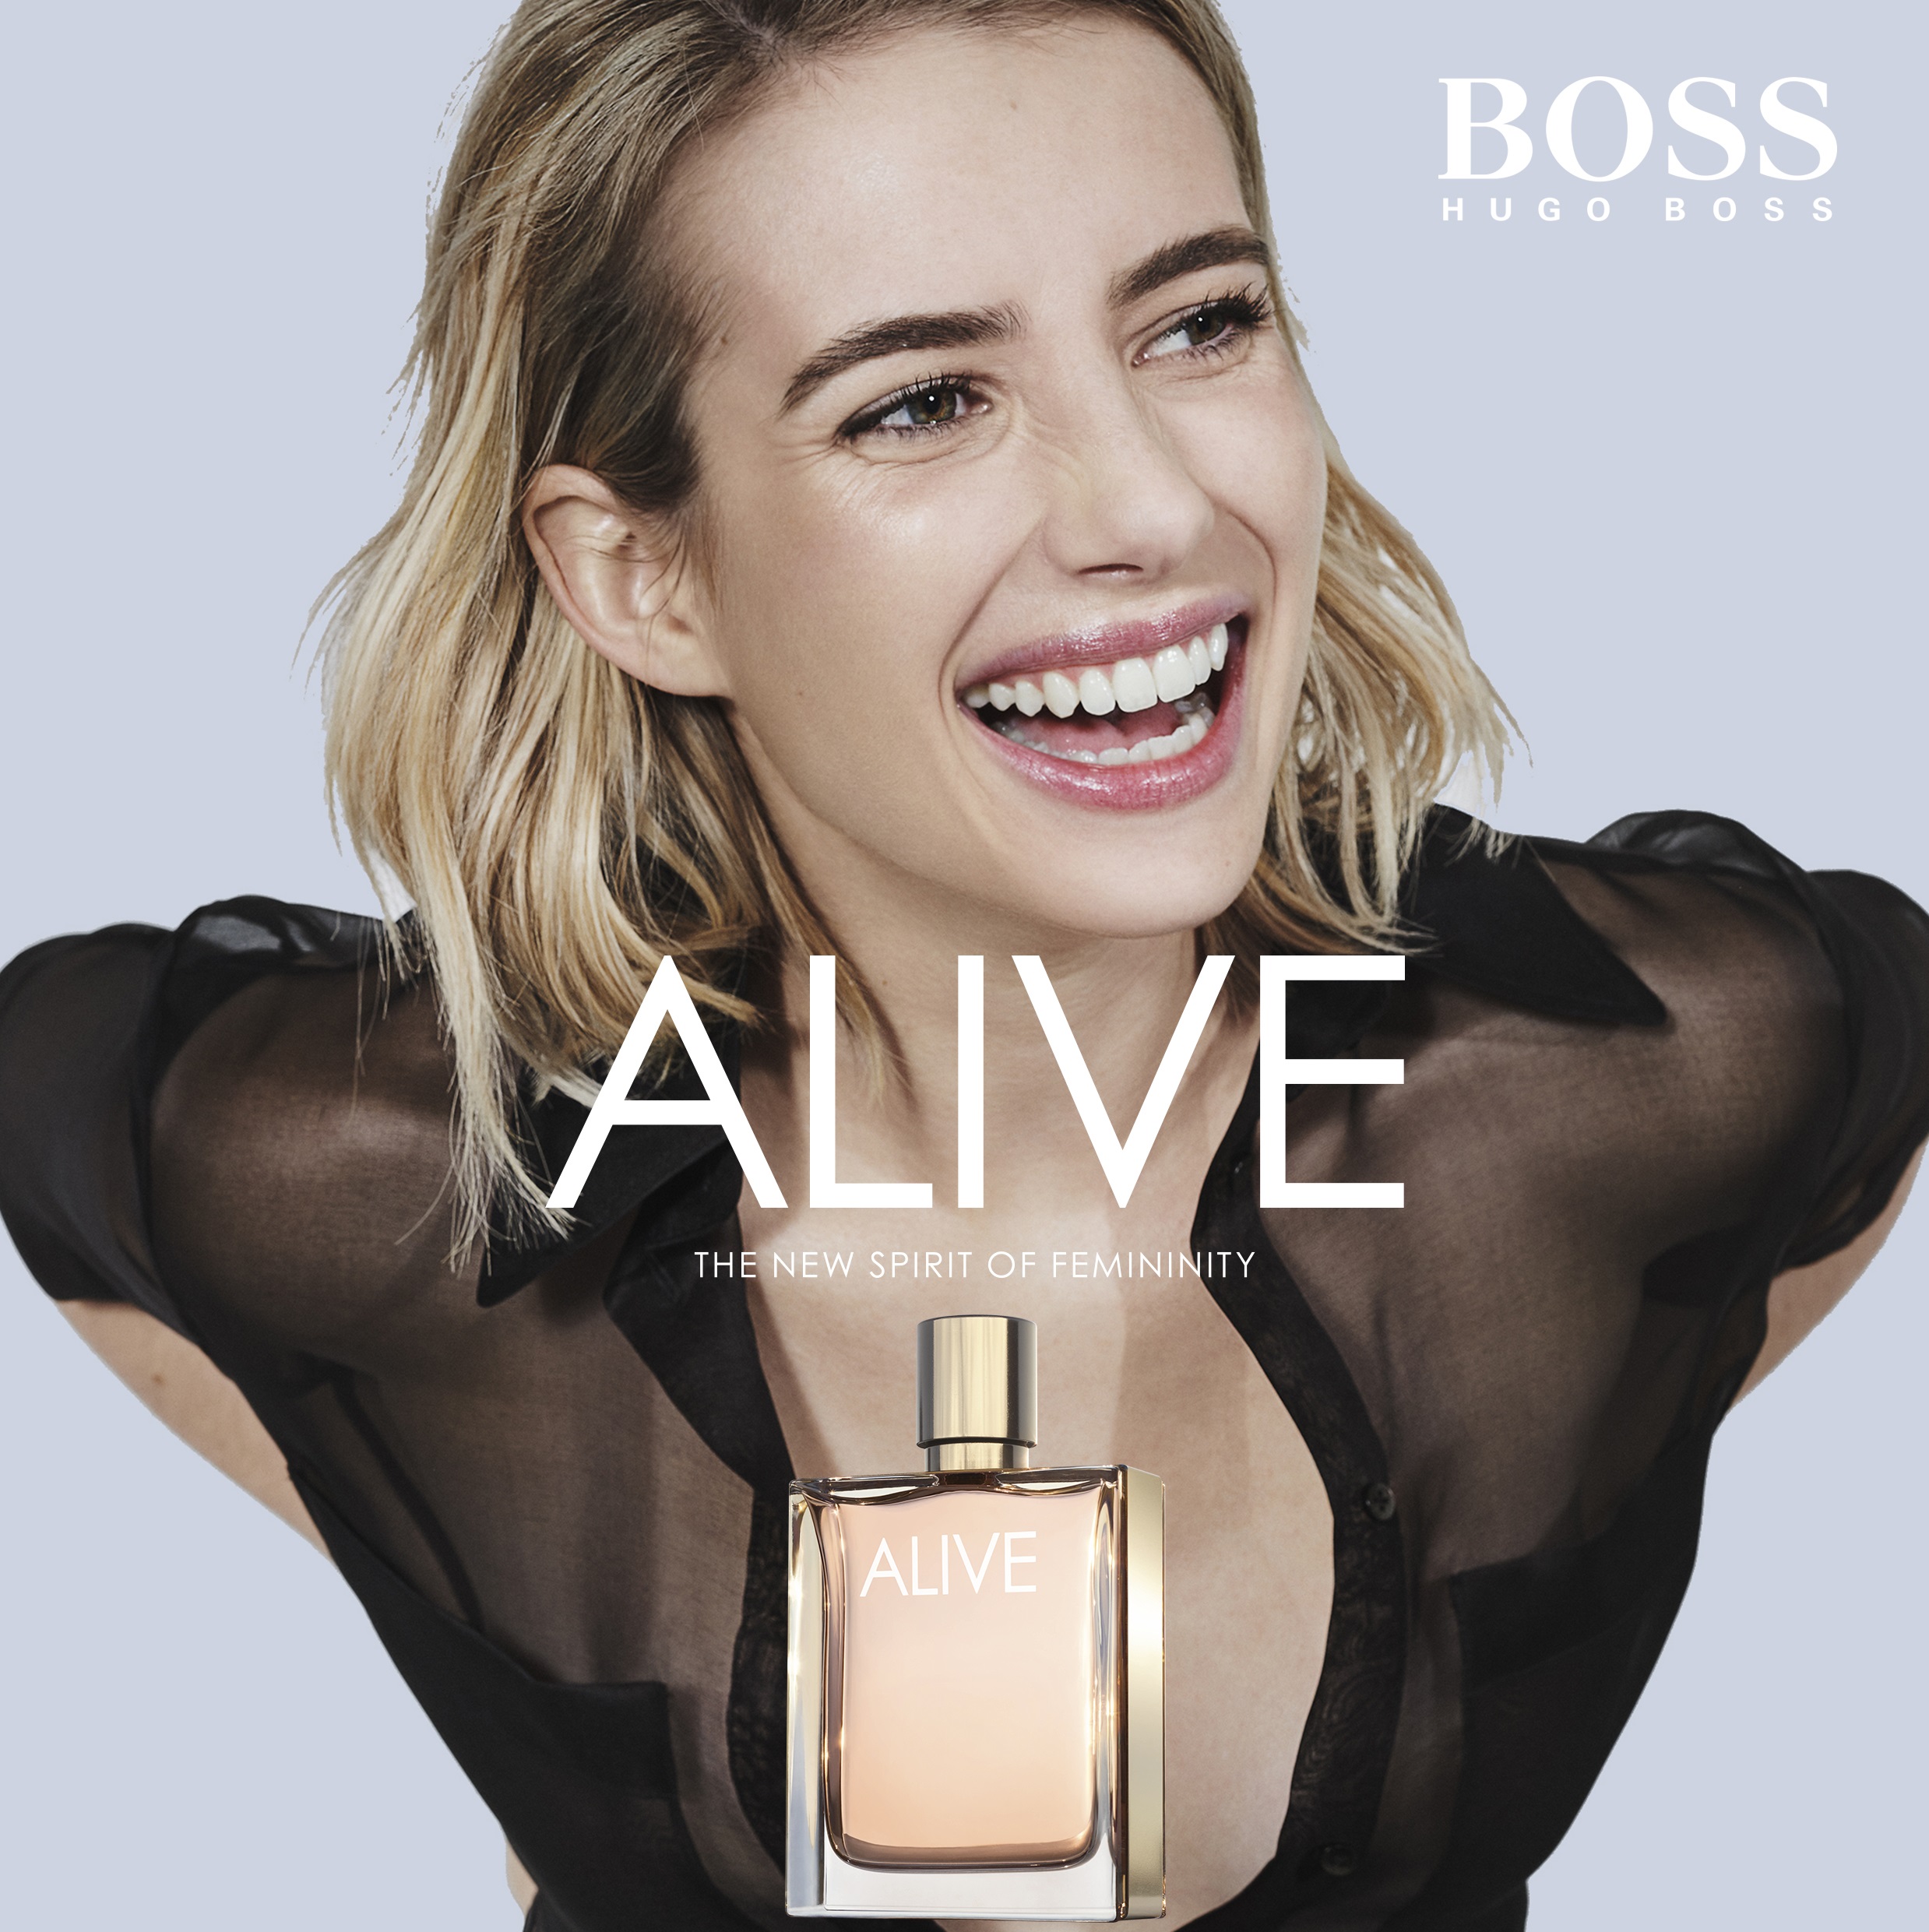 Hugo Boss Boss Alive Woman  Eau de Parfum